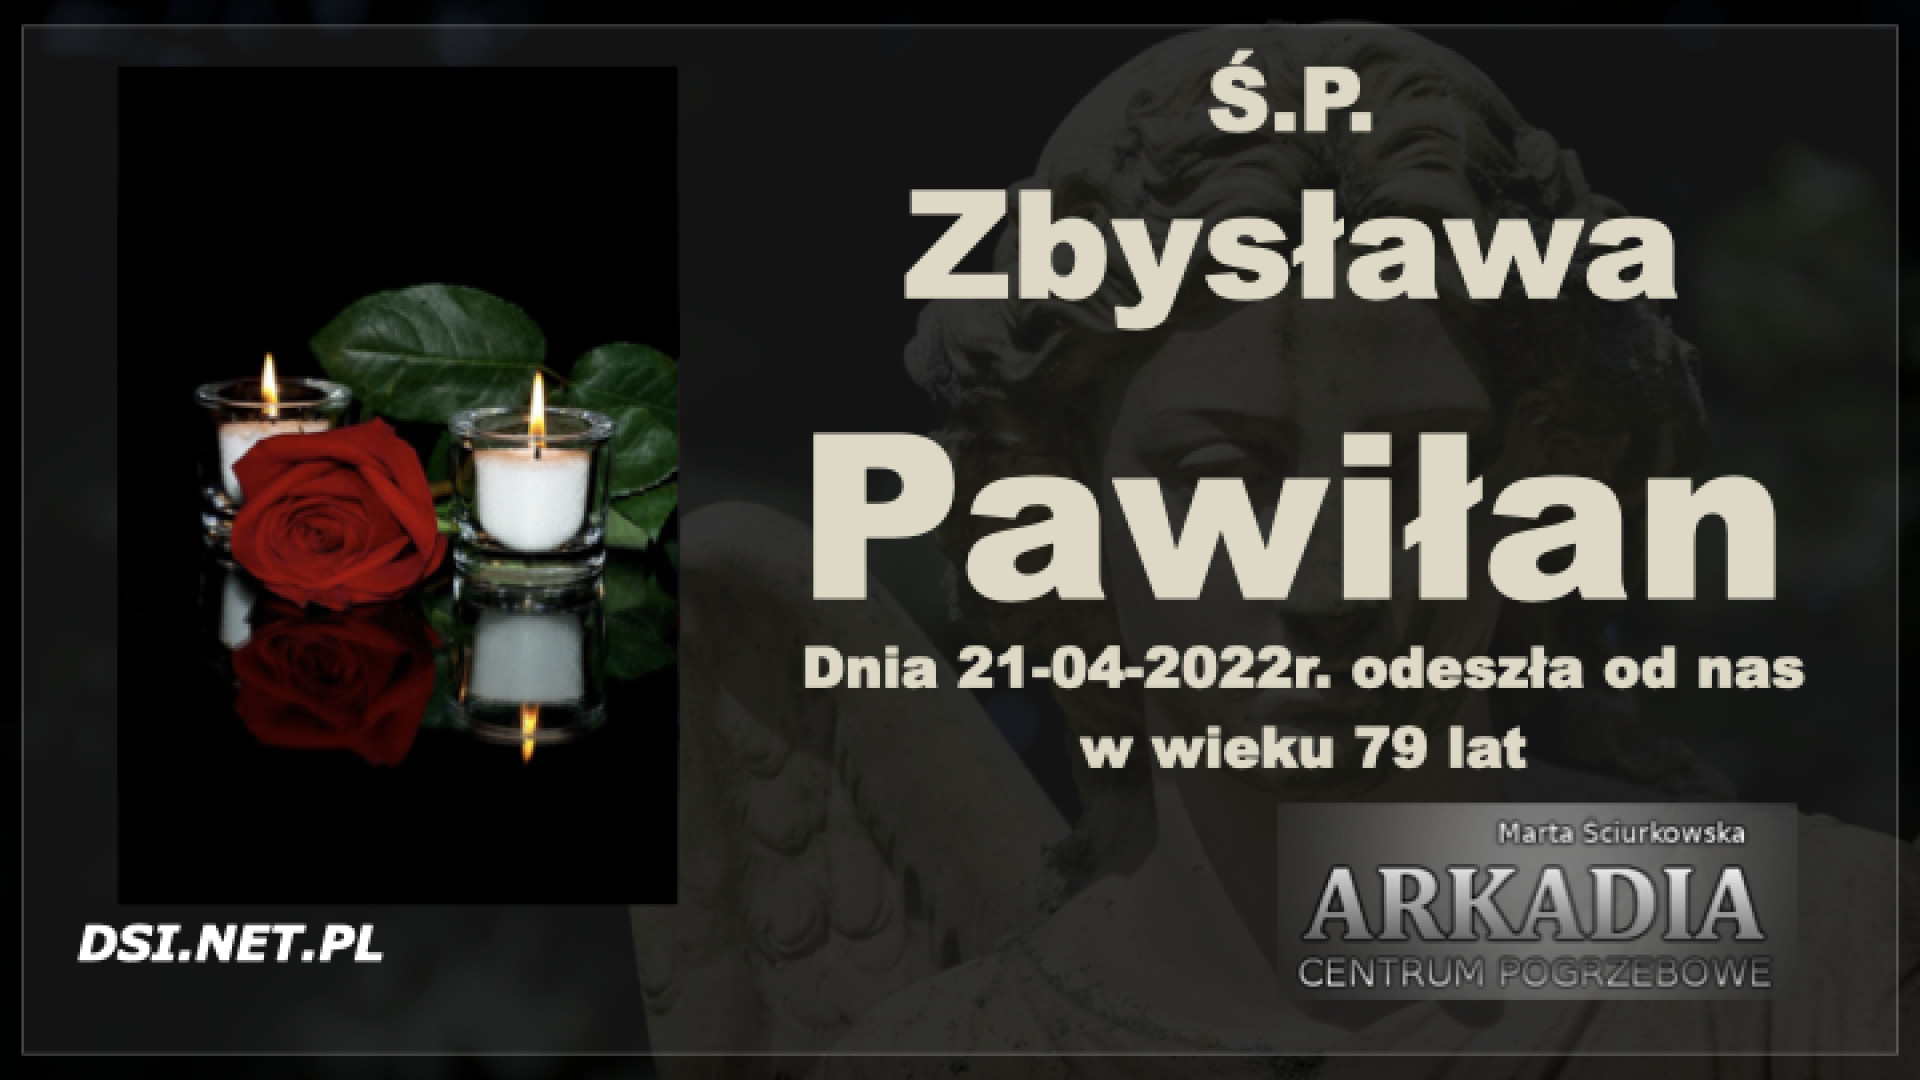 Ś.P. Zbysława Pawiłan